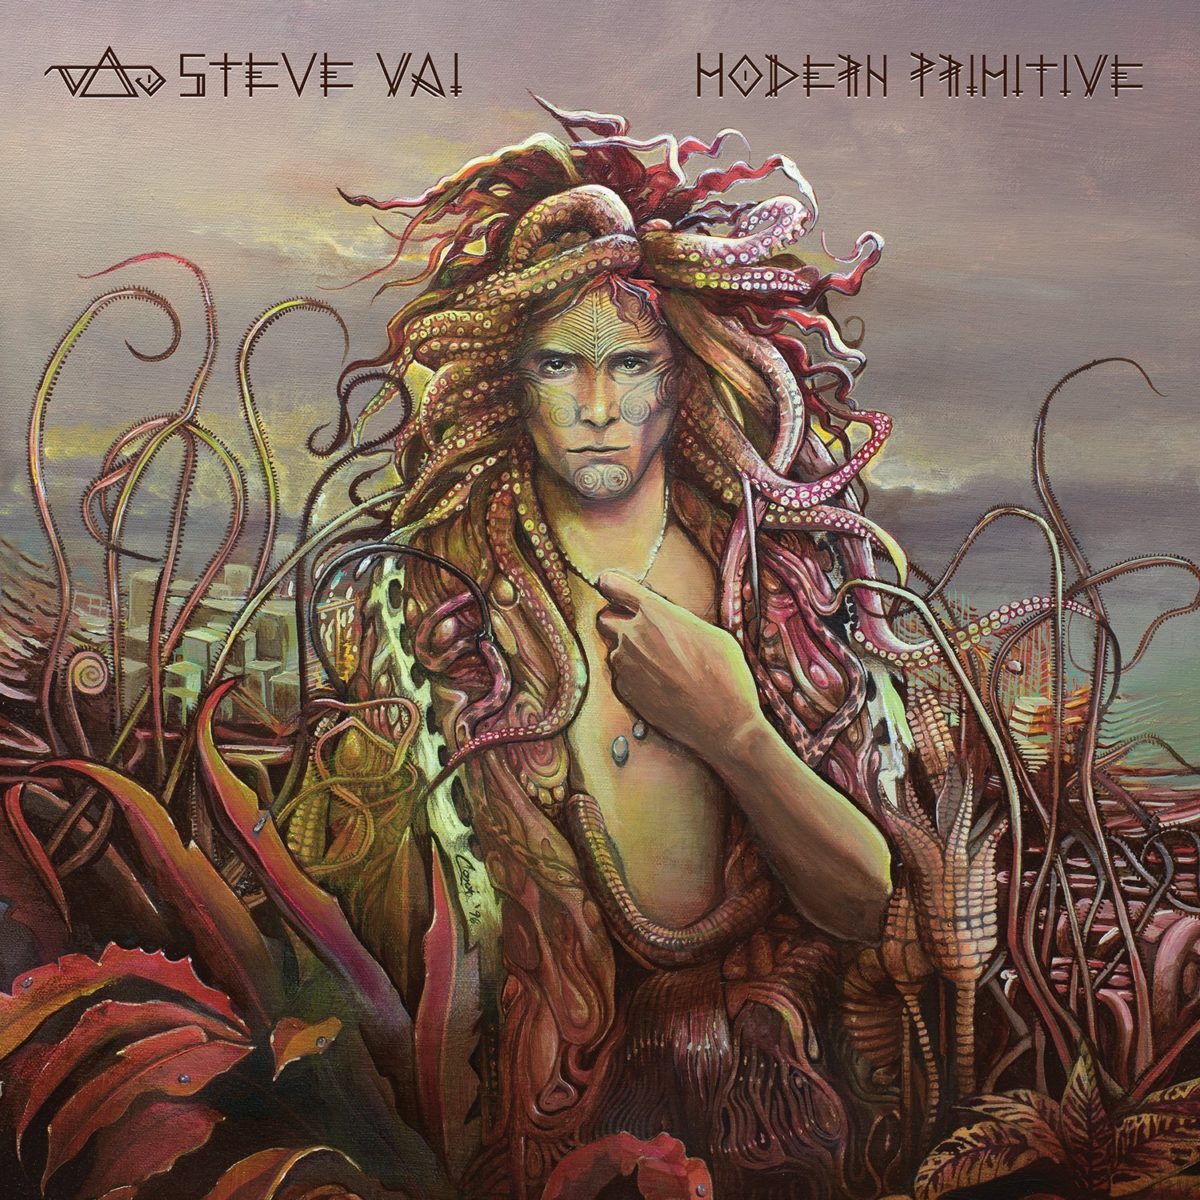 stevevai.it - Steve Vai - Modern Primitive